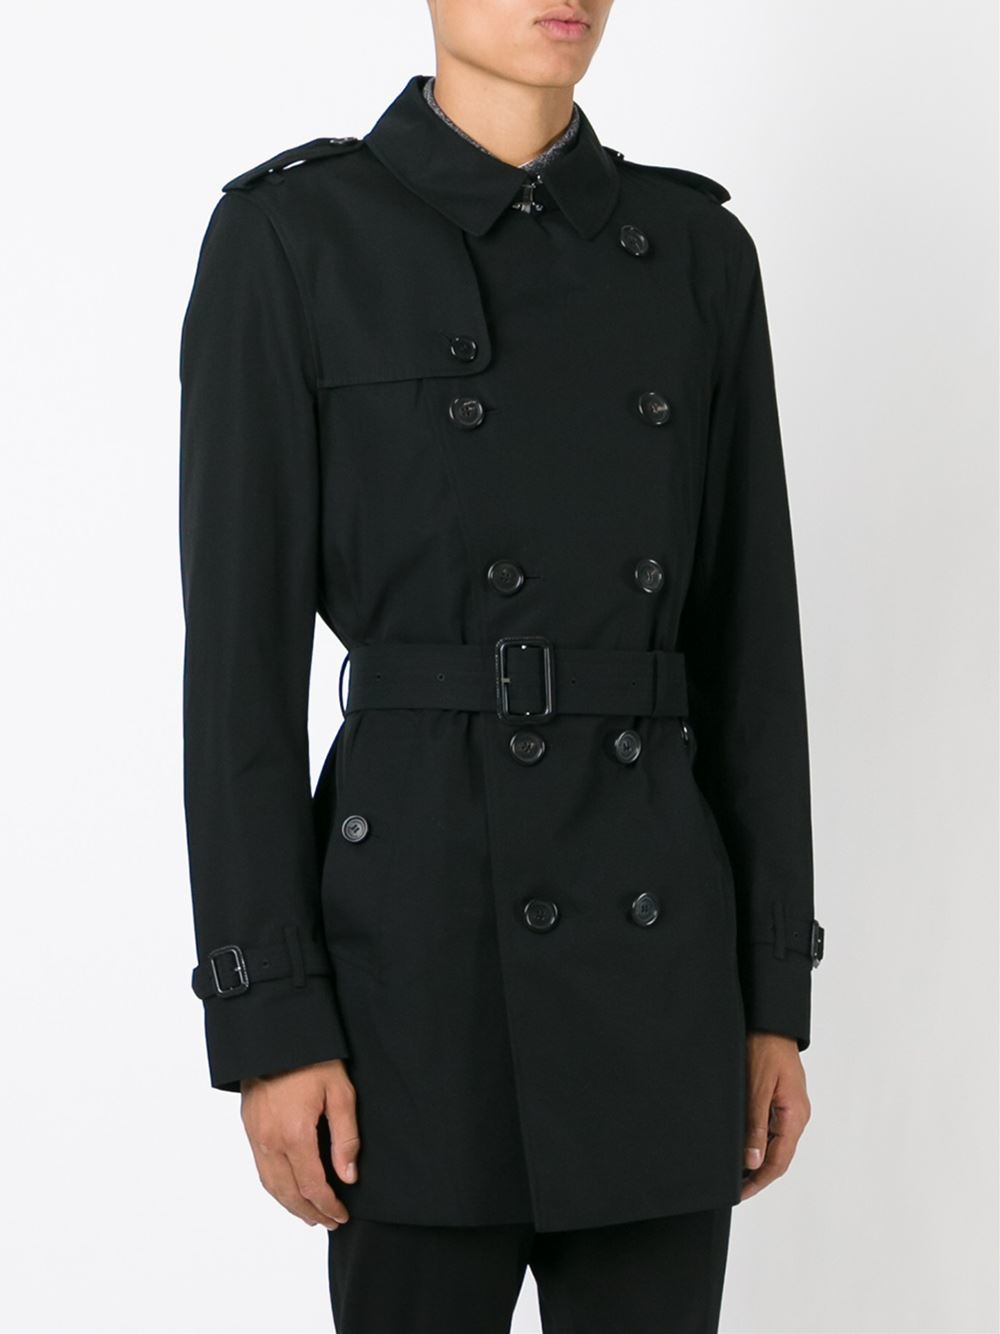 Burberry 'kensington' Trench Coat in Black for Men | Lyst